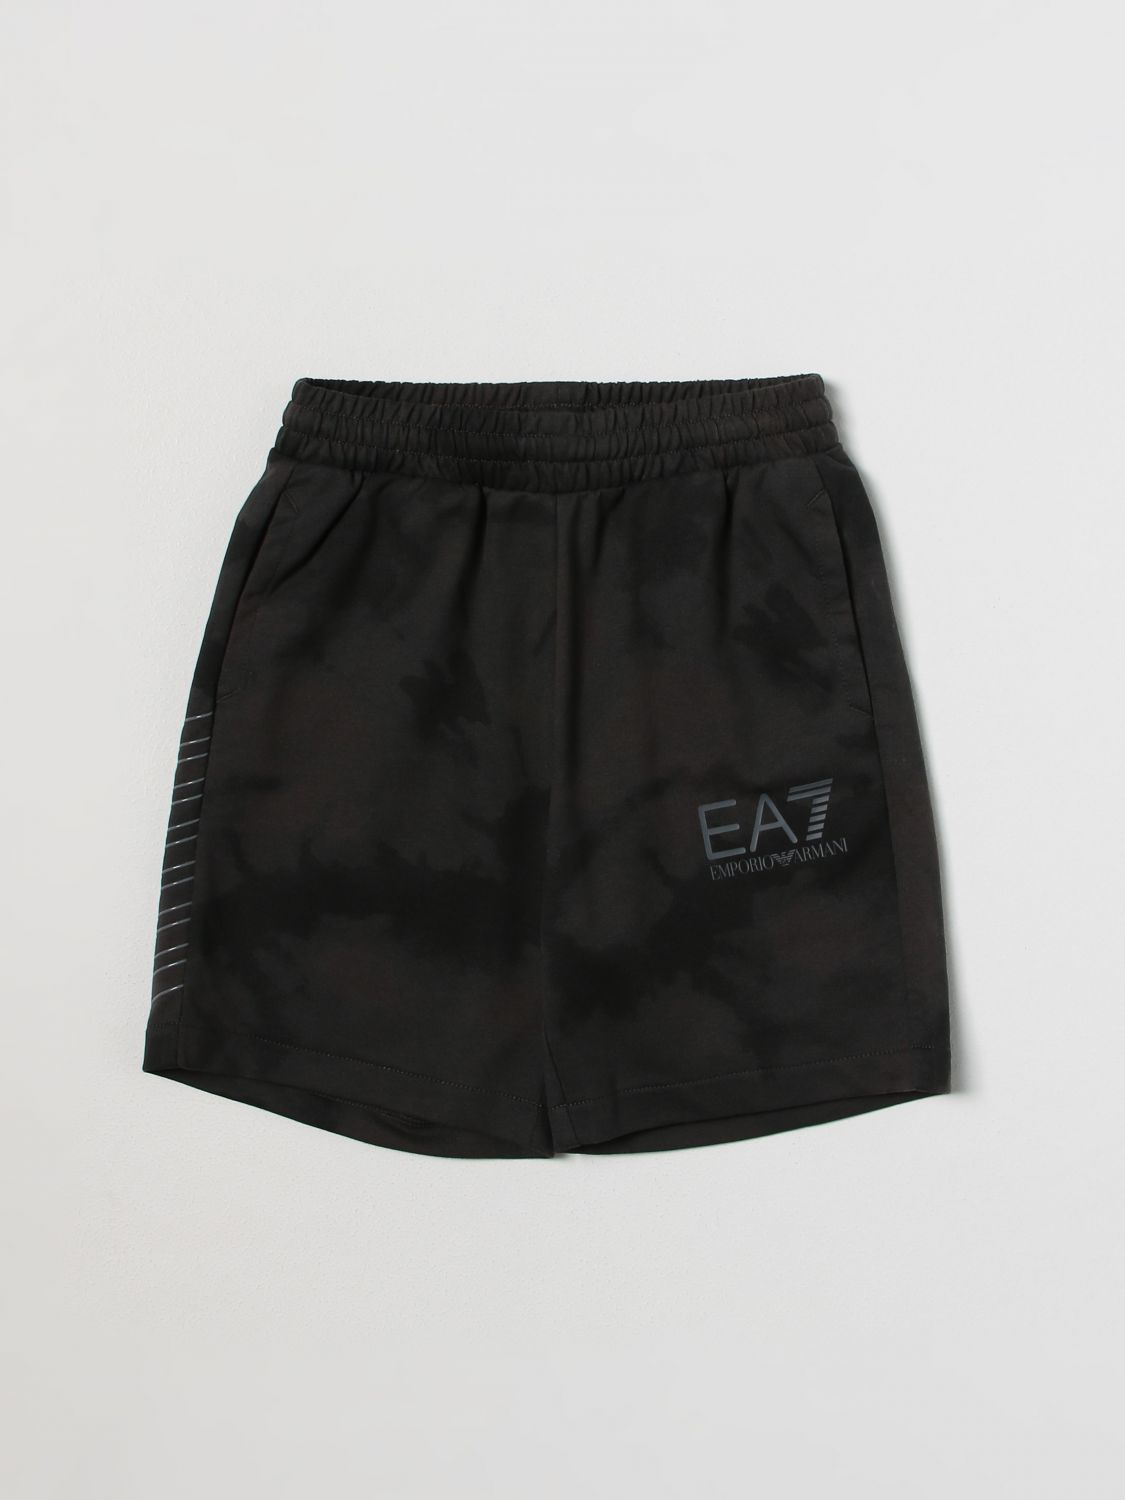 Ea7 Shorts  Kids Color Black